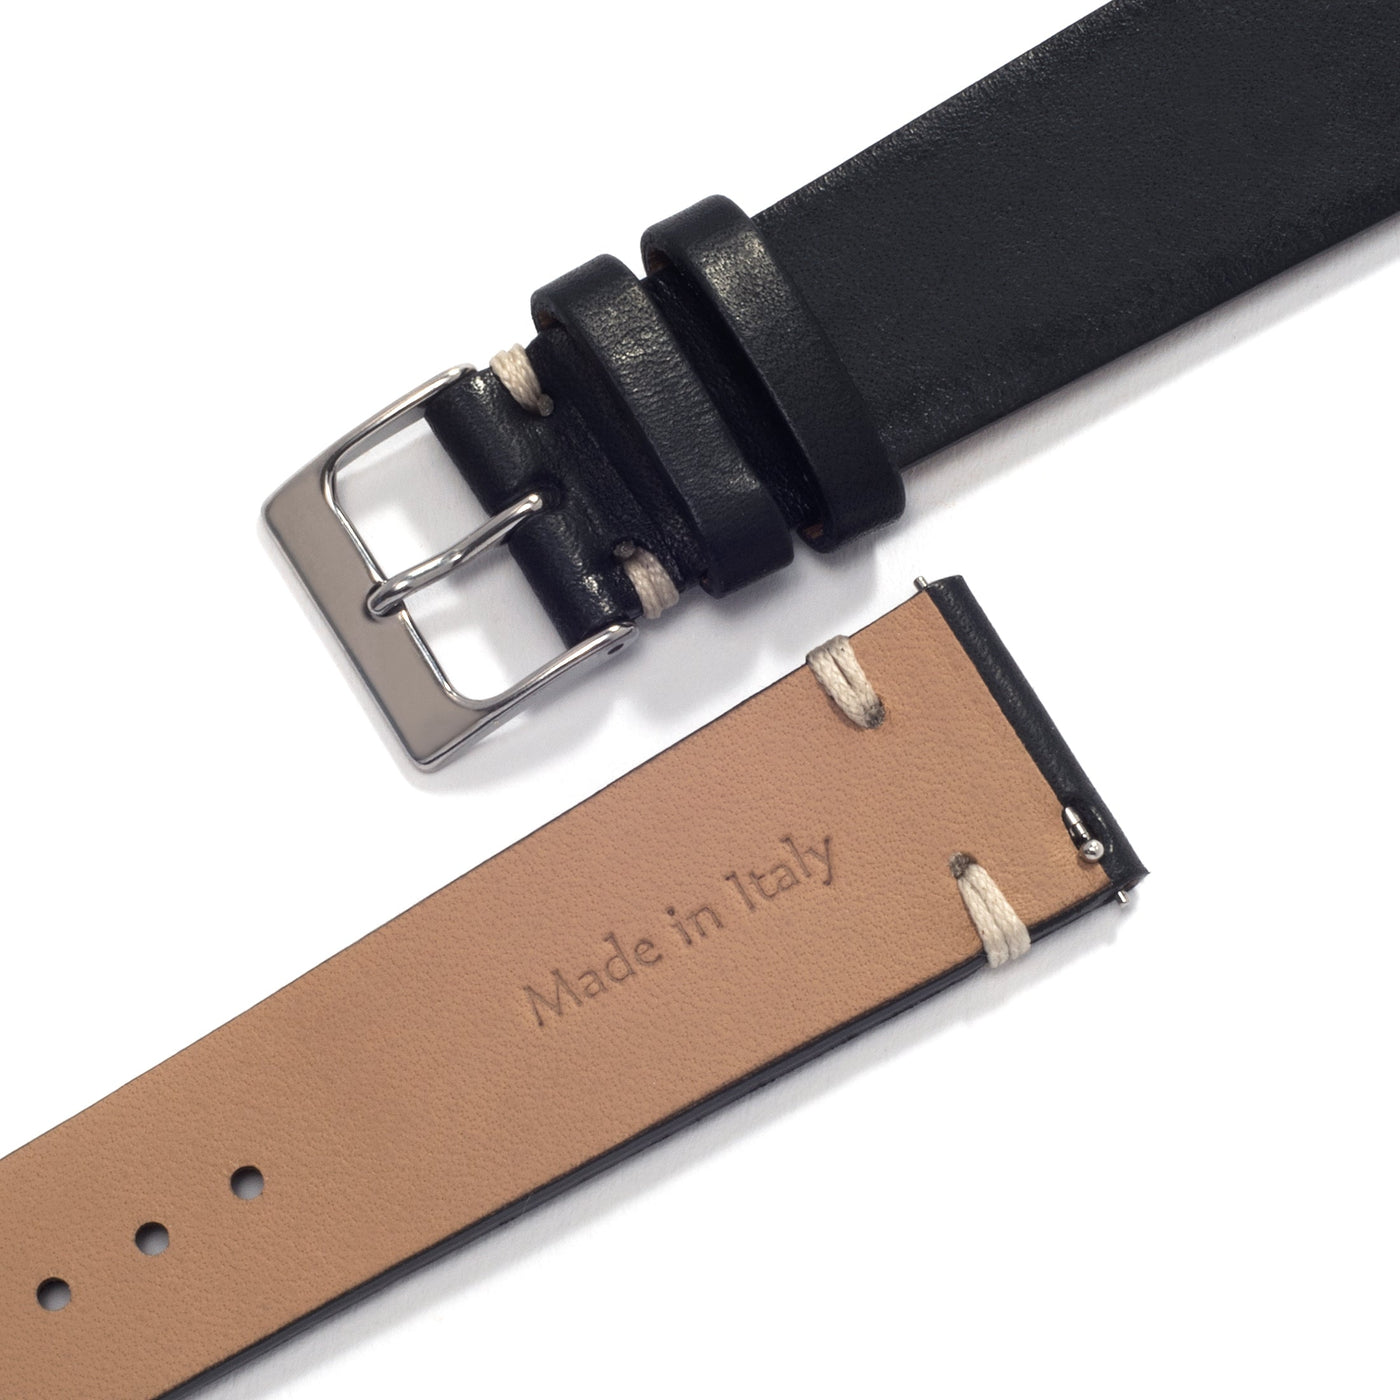 Black Leather Universal Watch Strap